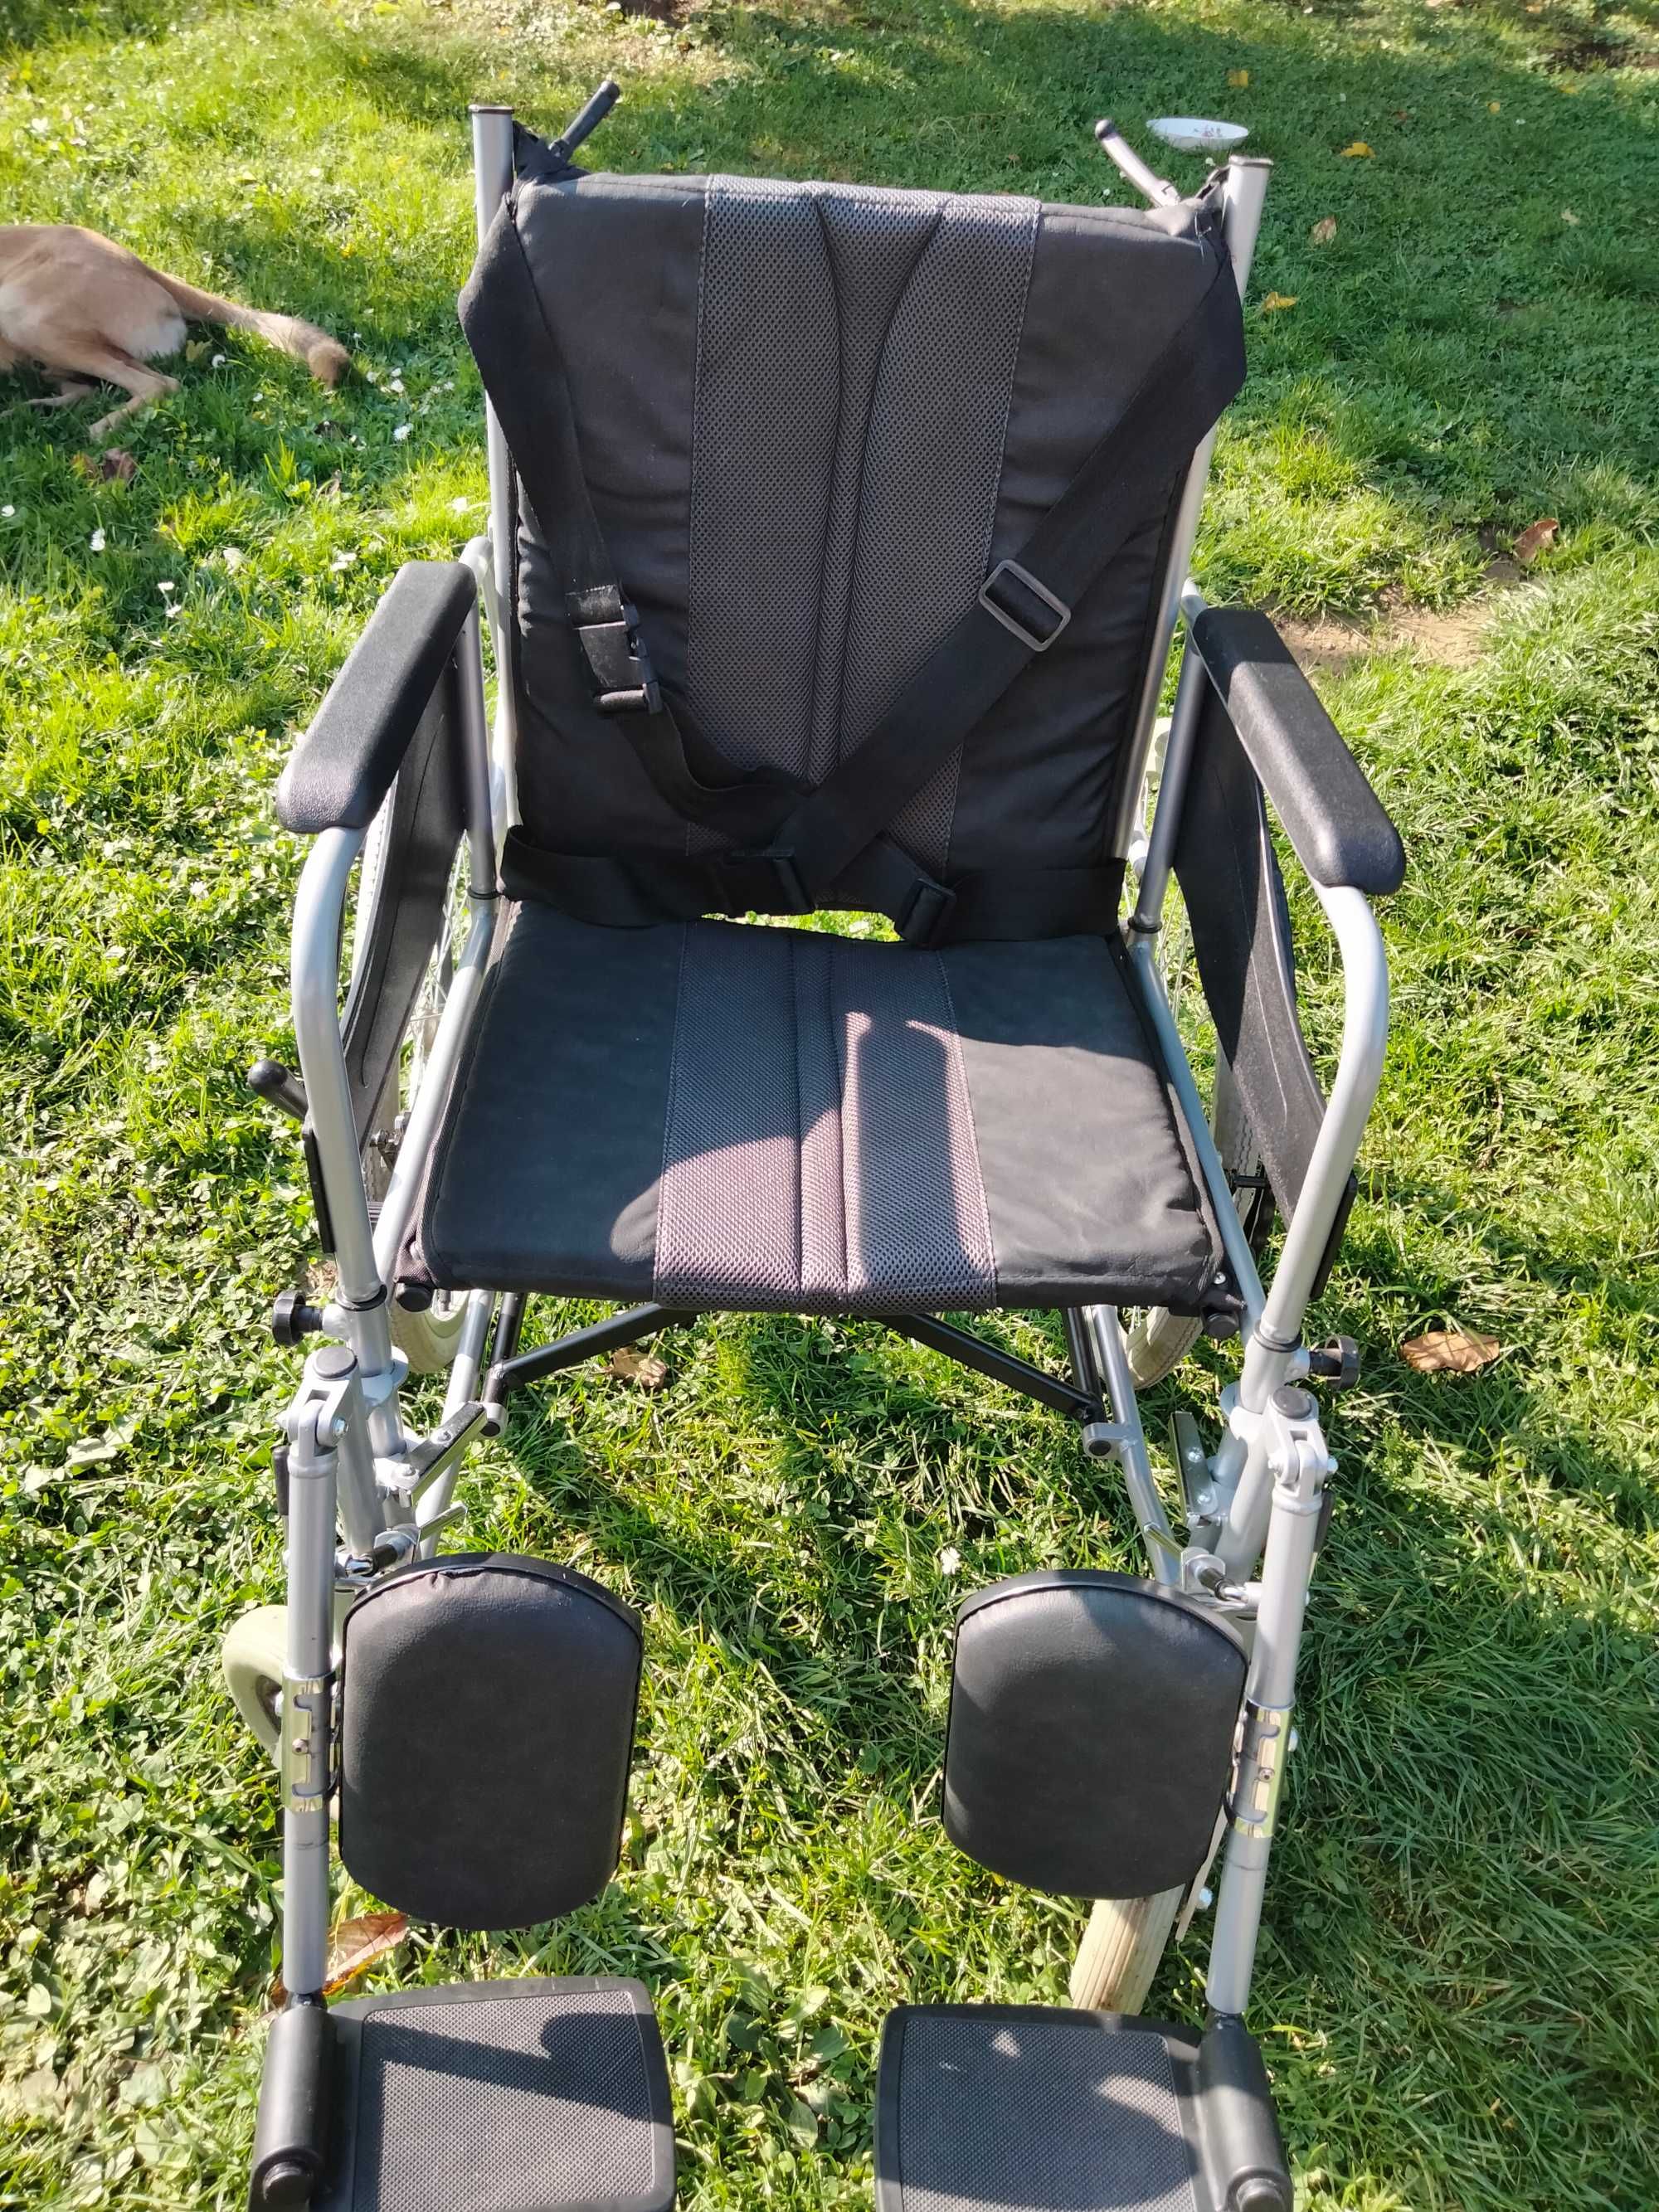 Wózek inwalidzki TIMAGO